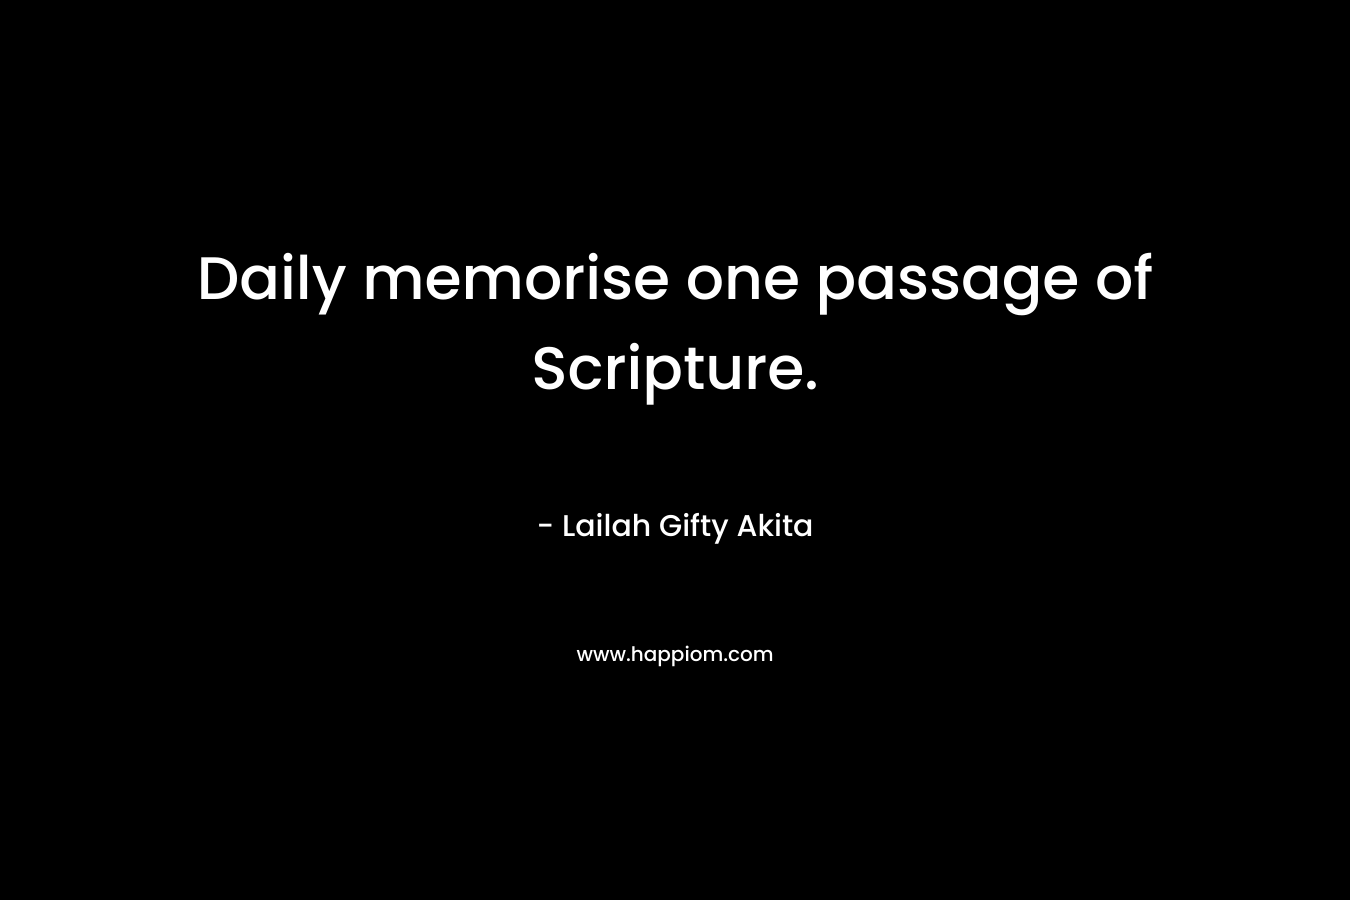 Daily memorise one passage of Scripture.